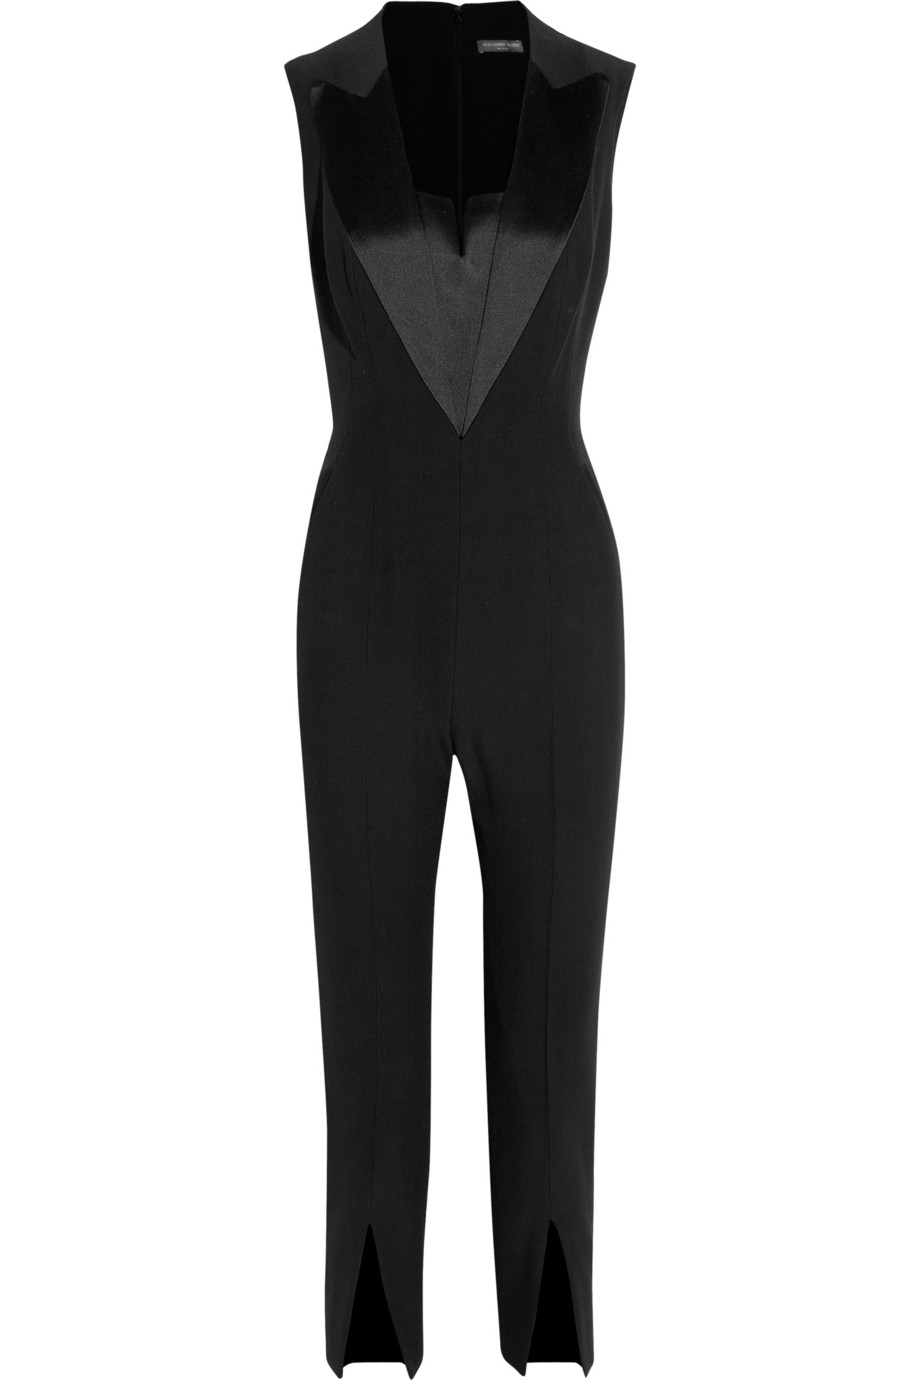 Lyst - Alexander Mcqueen Silk Satin Trimmed Crepe Jumpsuit in Black